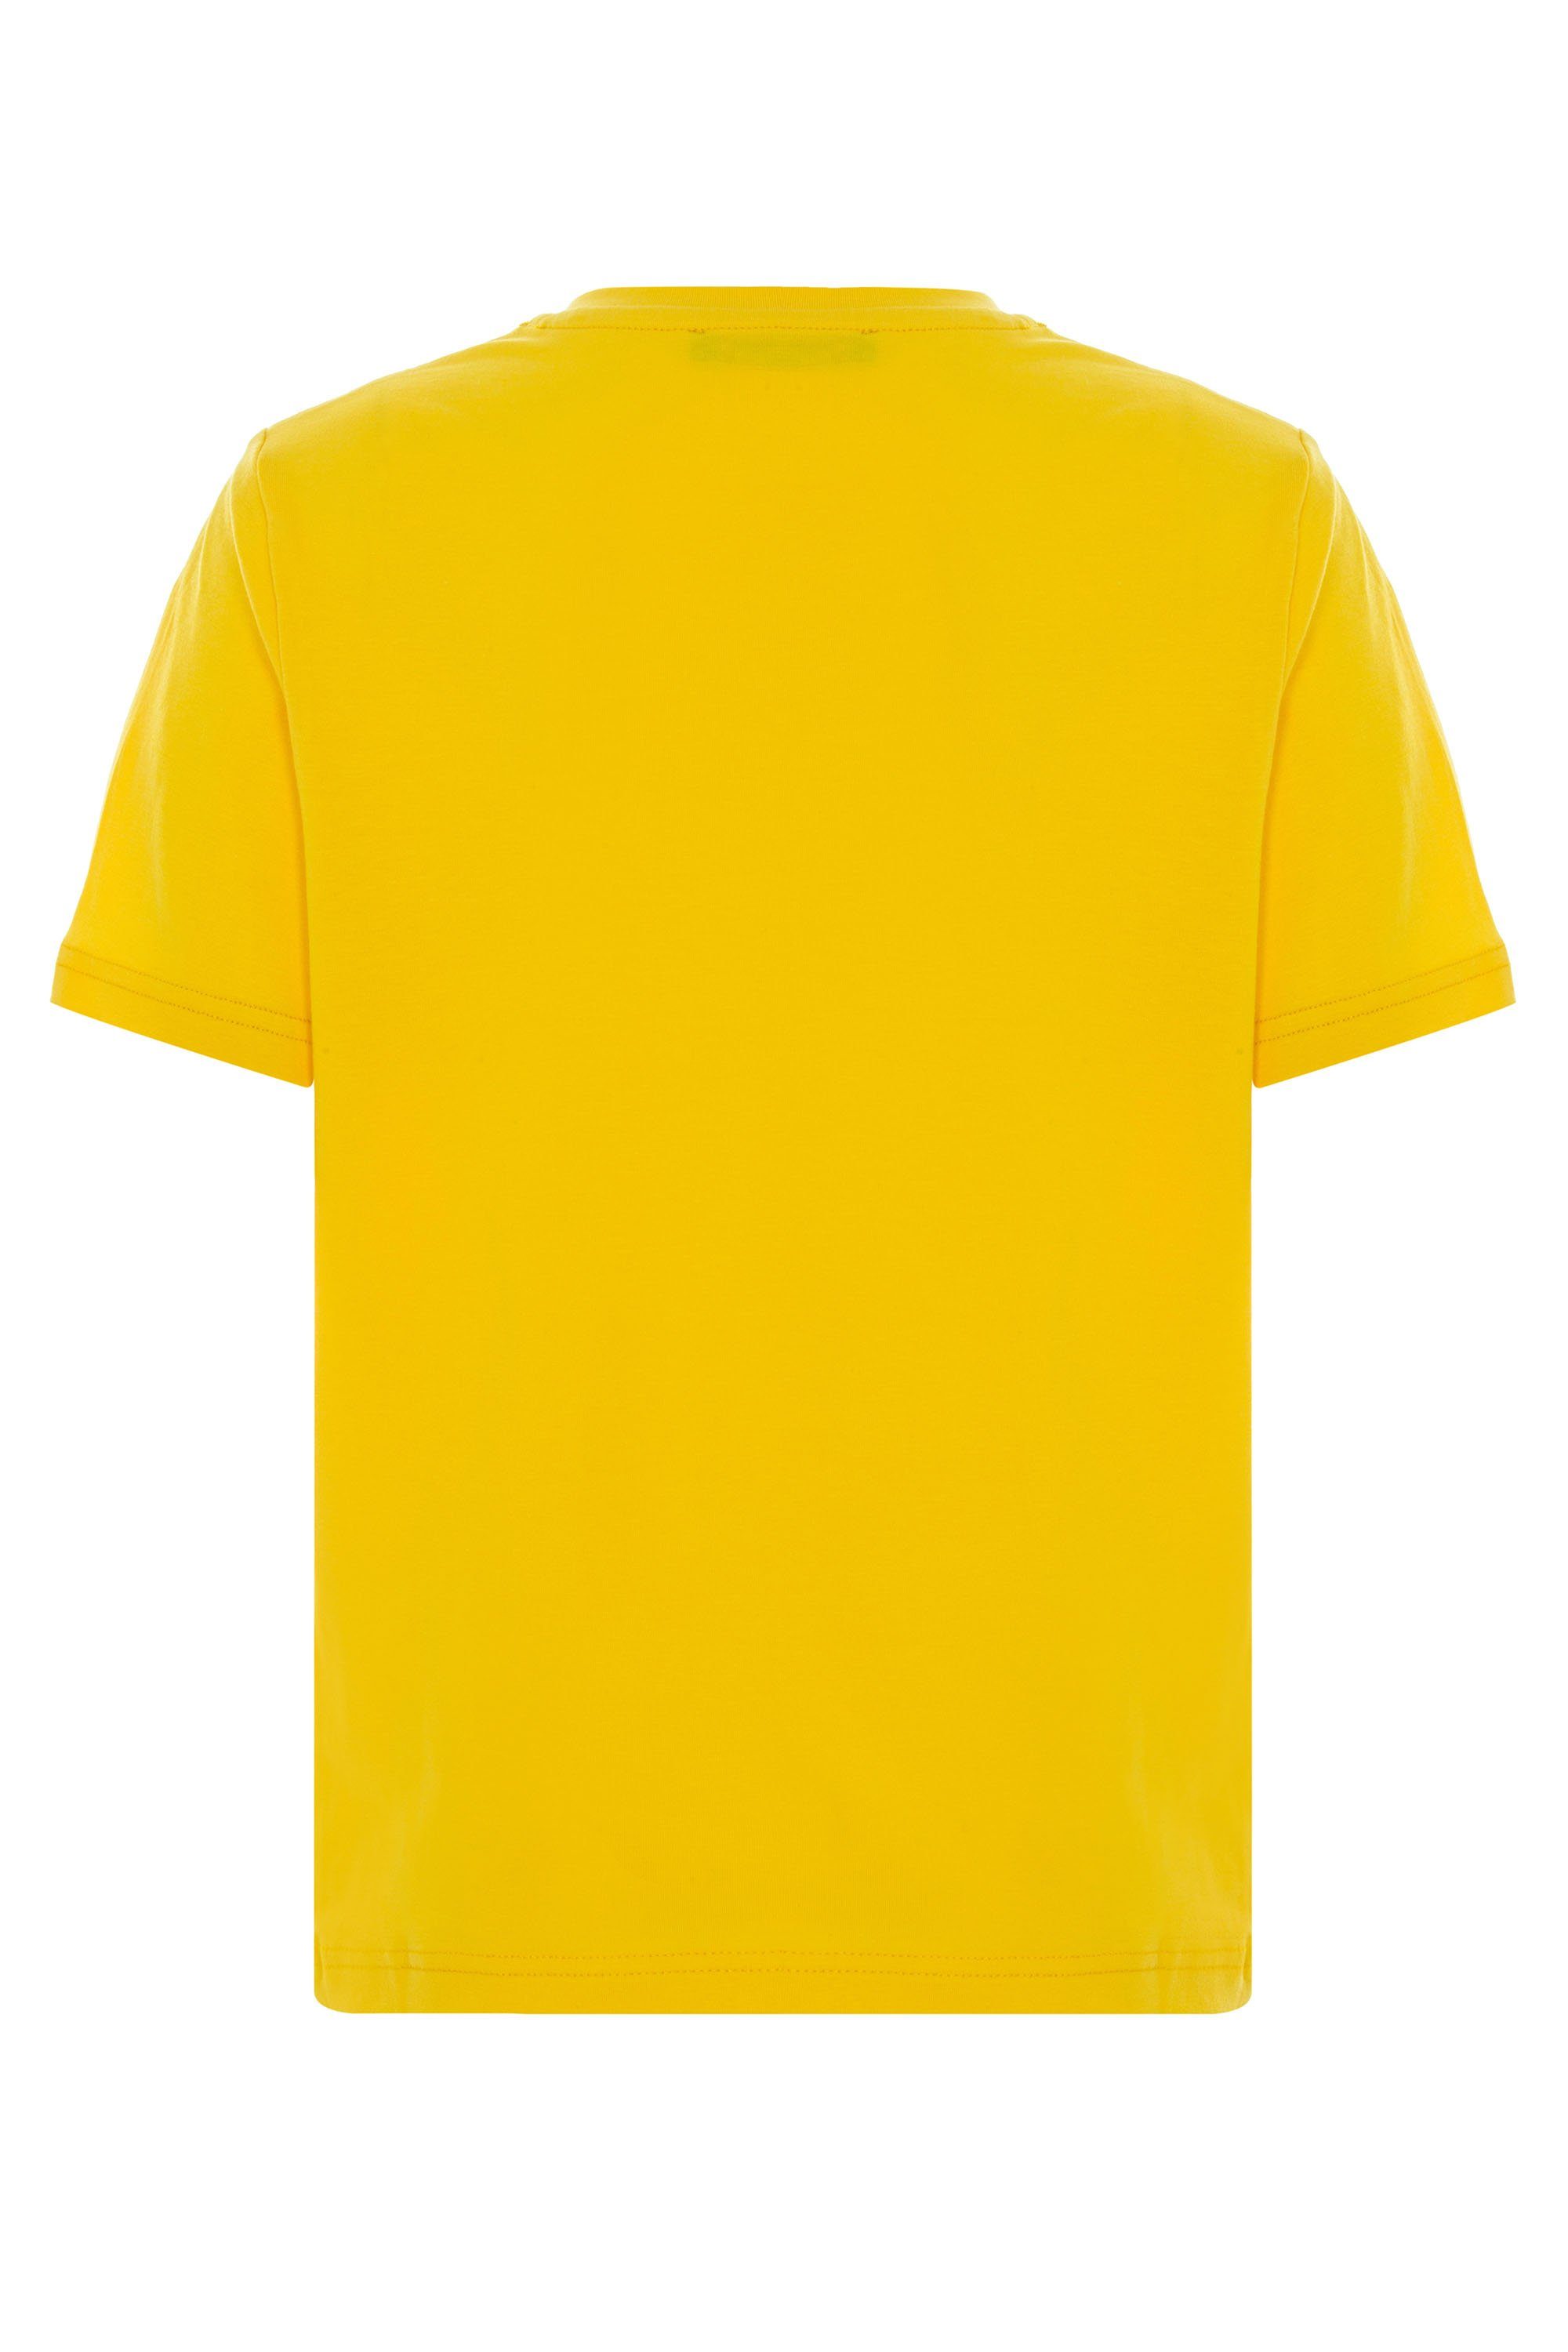 Print & mit gelb-schwarz coolem Baxx T-Shirt Cipo